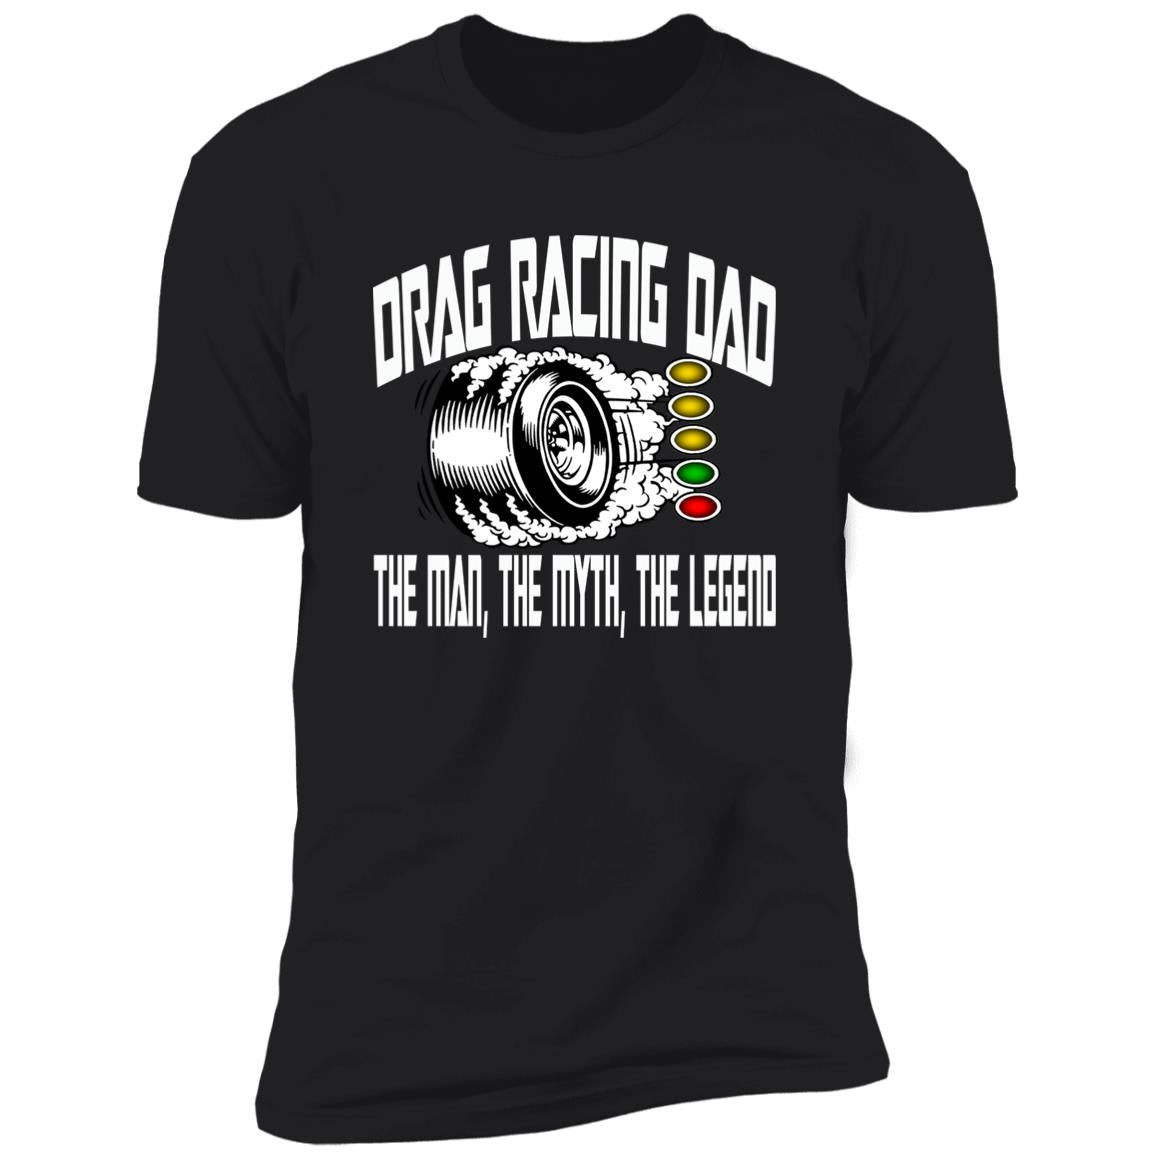 Drag Racing Dad Premium Short Sleeve T-Shirt